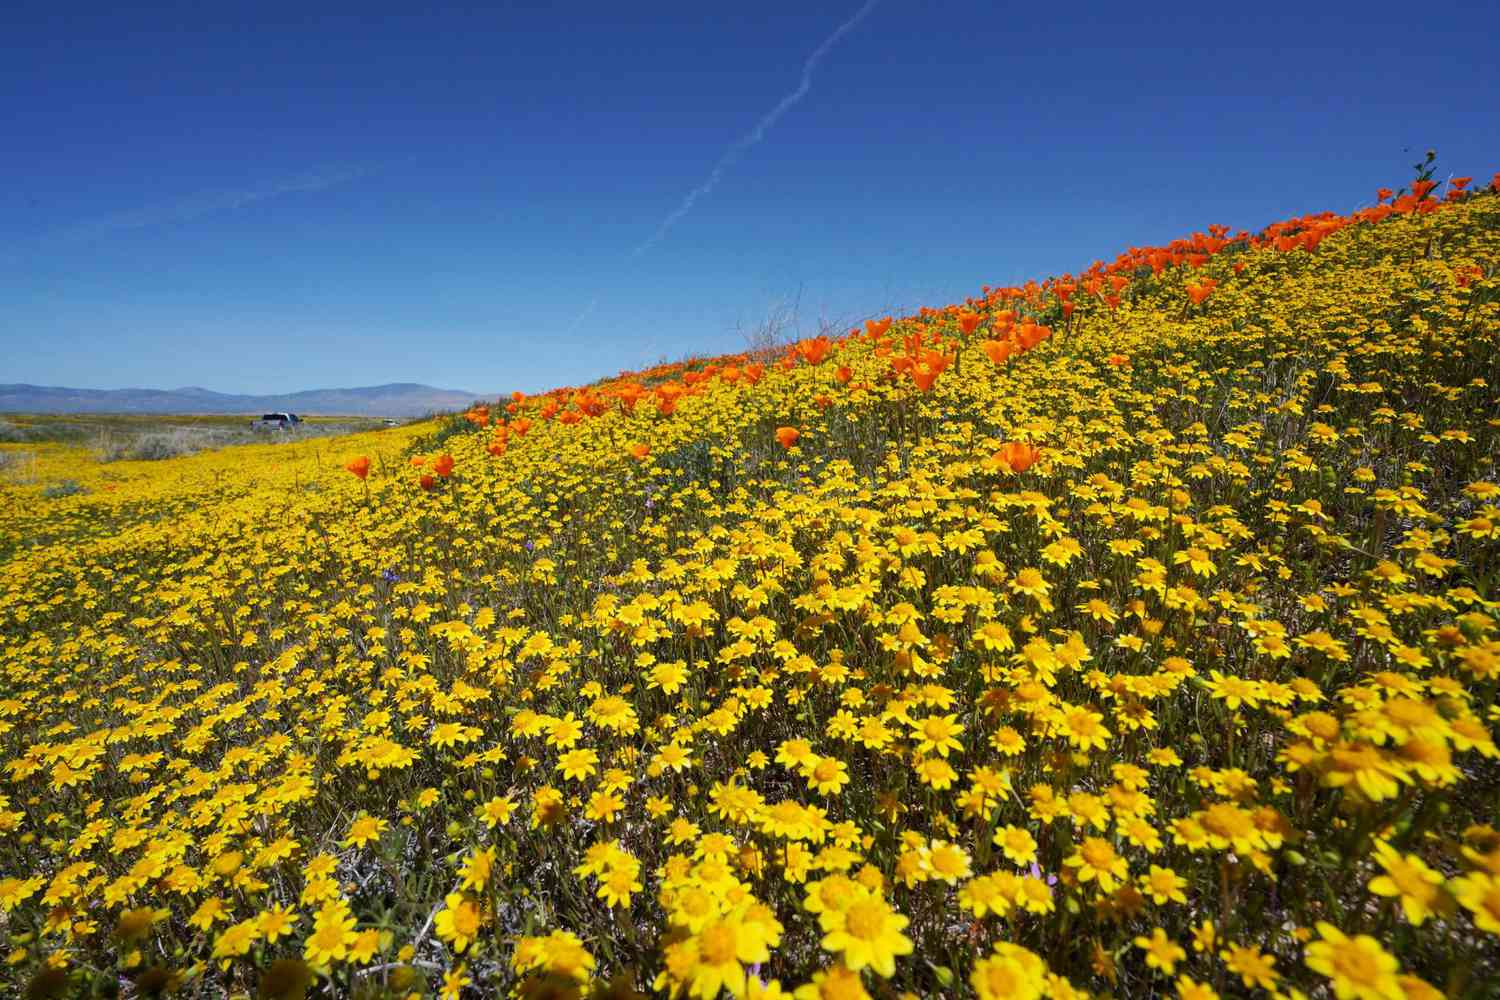 California Poppy Super Bloom, Antelope Valley, USA - 01 Apr 2019